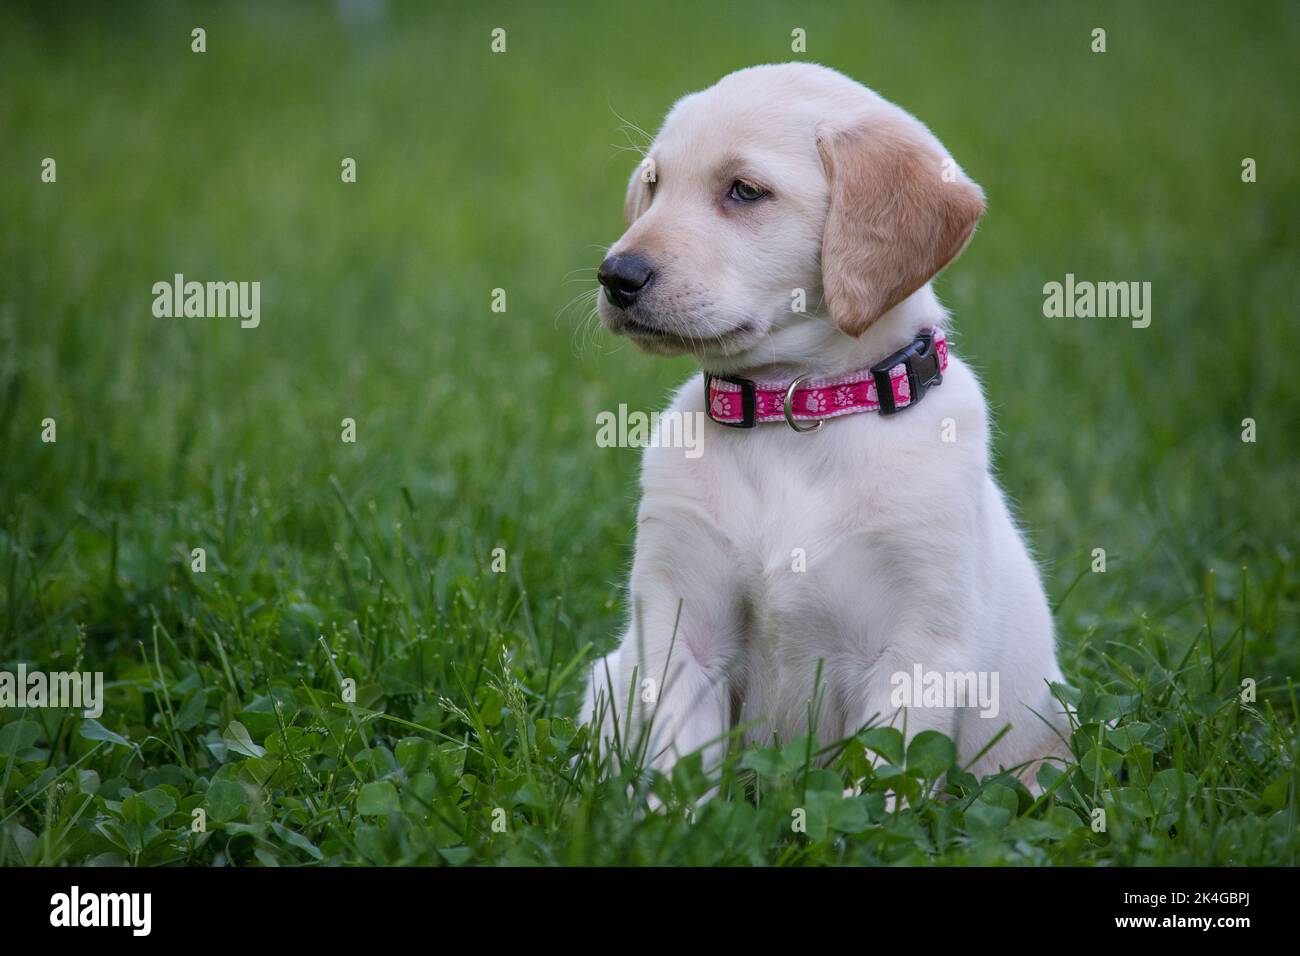 Adorable 8 week old labrador retriever puppy with pink collar Stock Photo